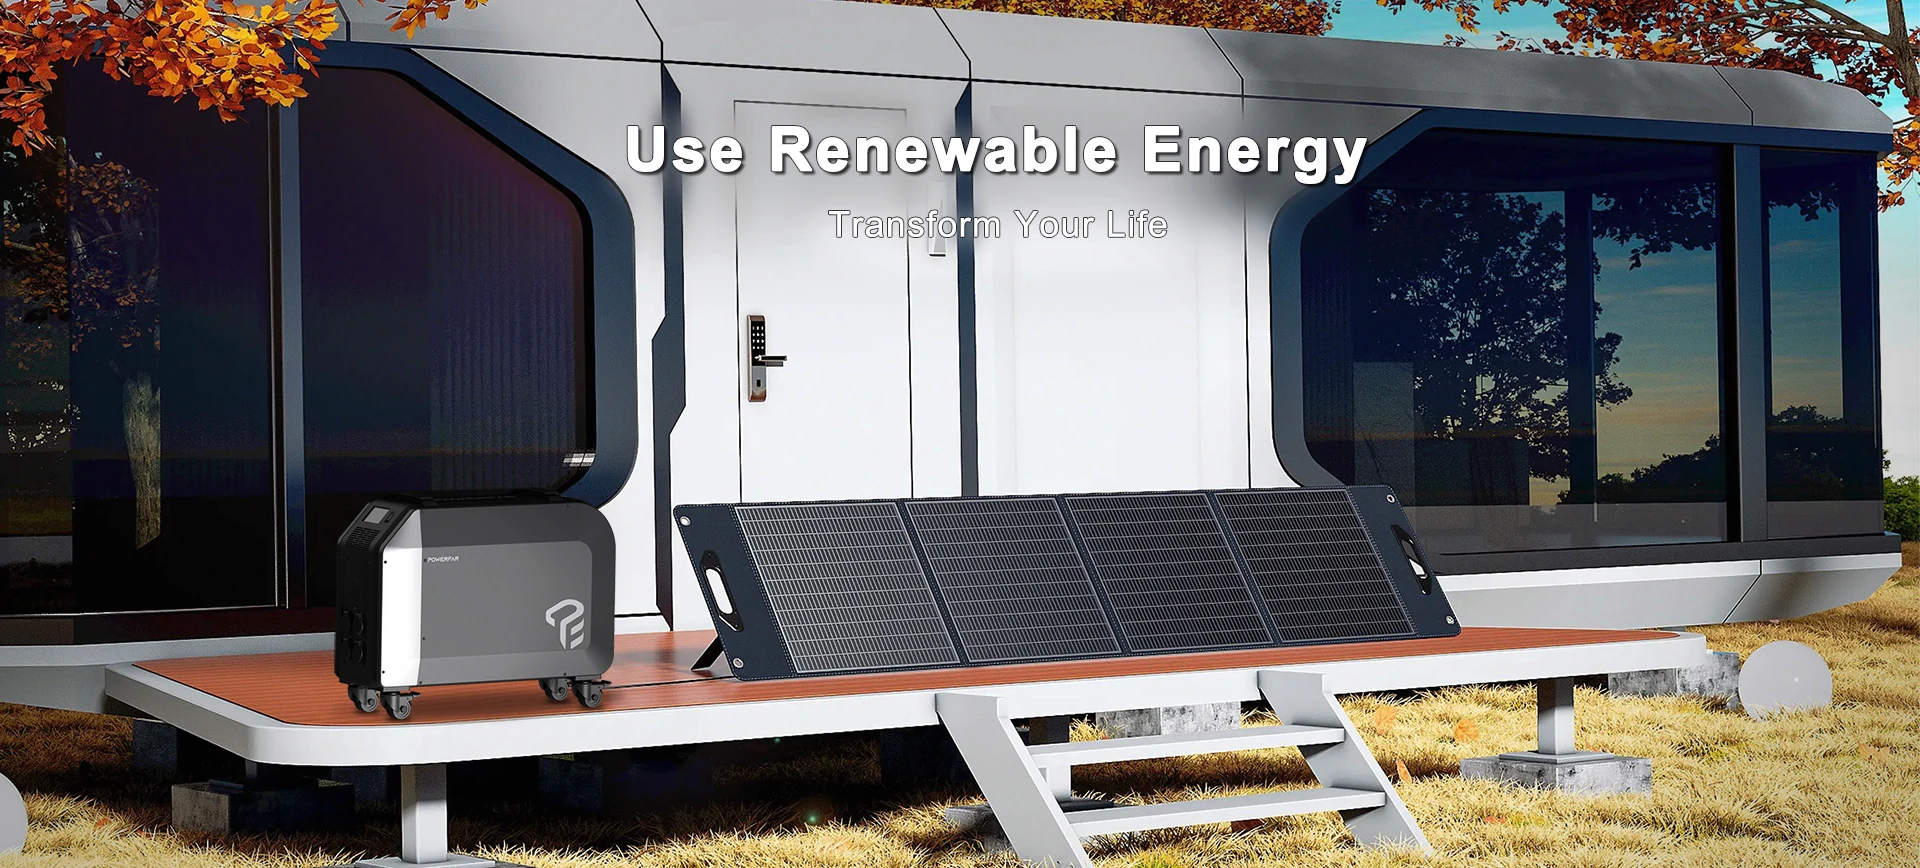 Use Renewable Energy, Transform Your Life.